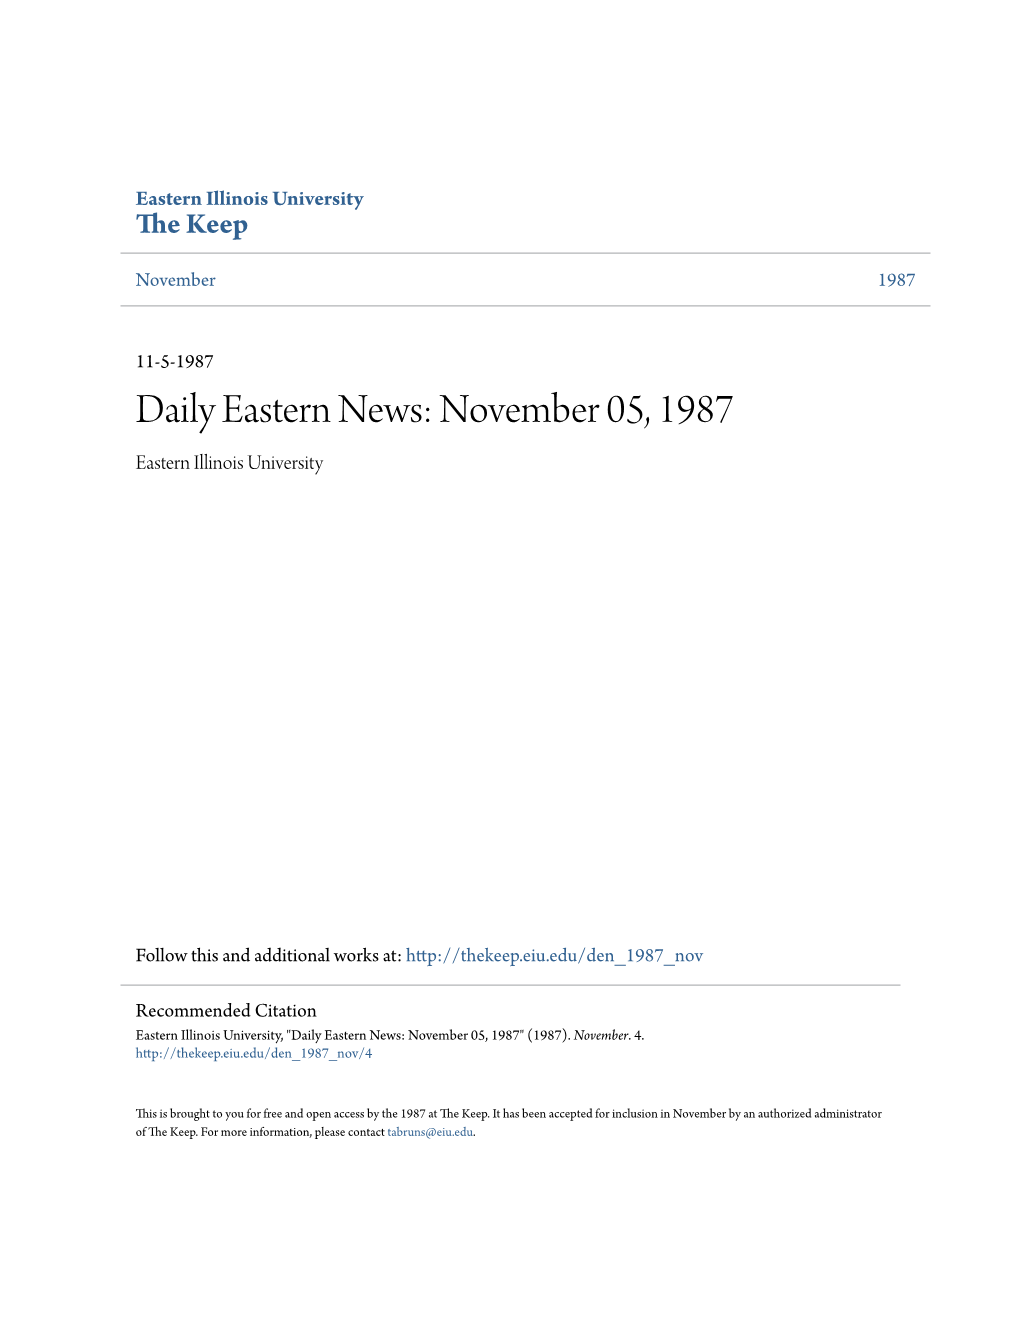 Daily Eastern News: November 05, 1987 Eastern Illinois University